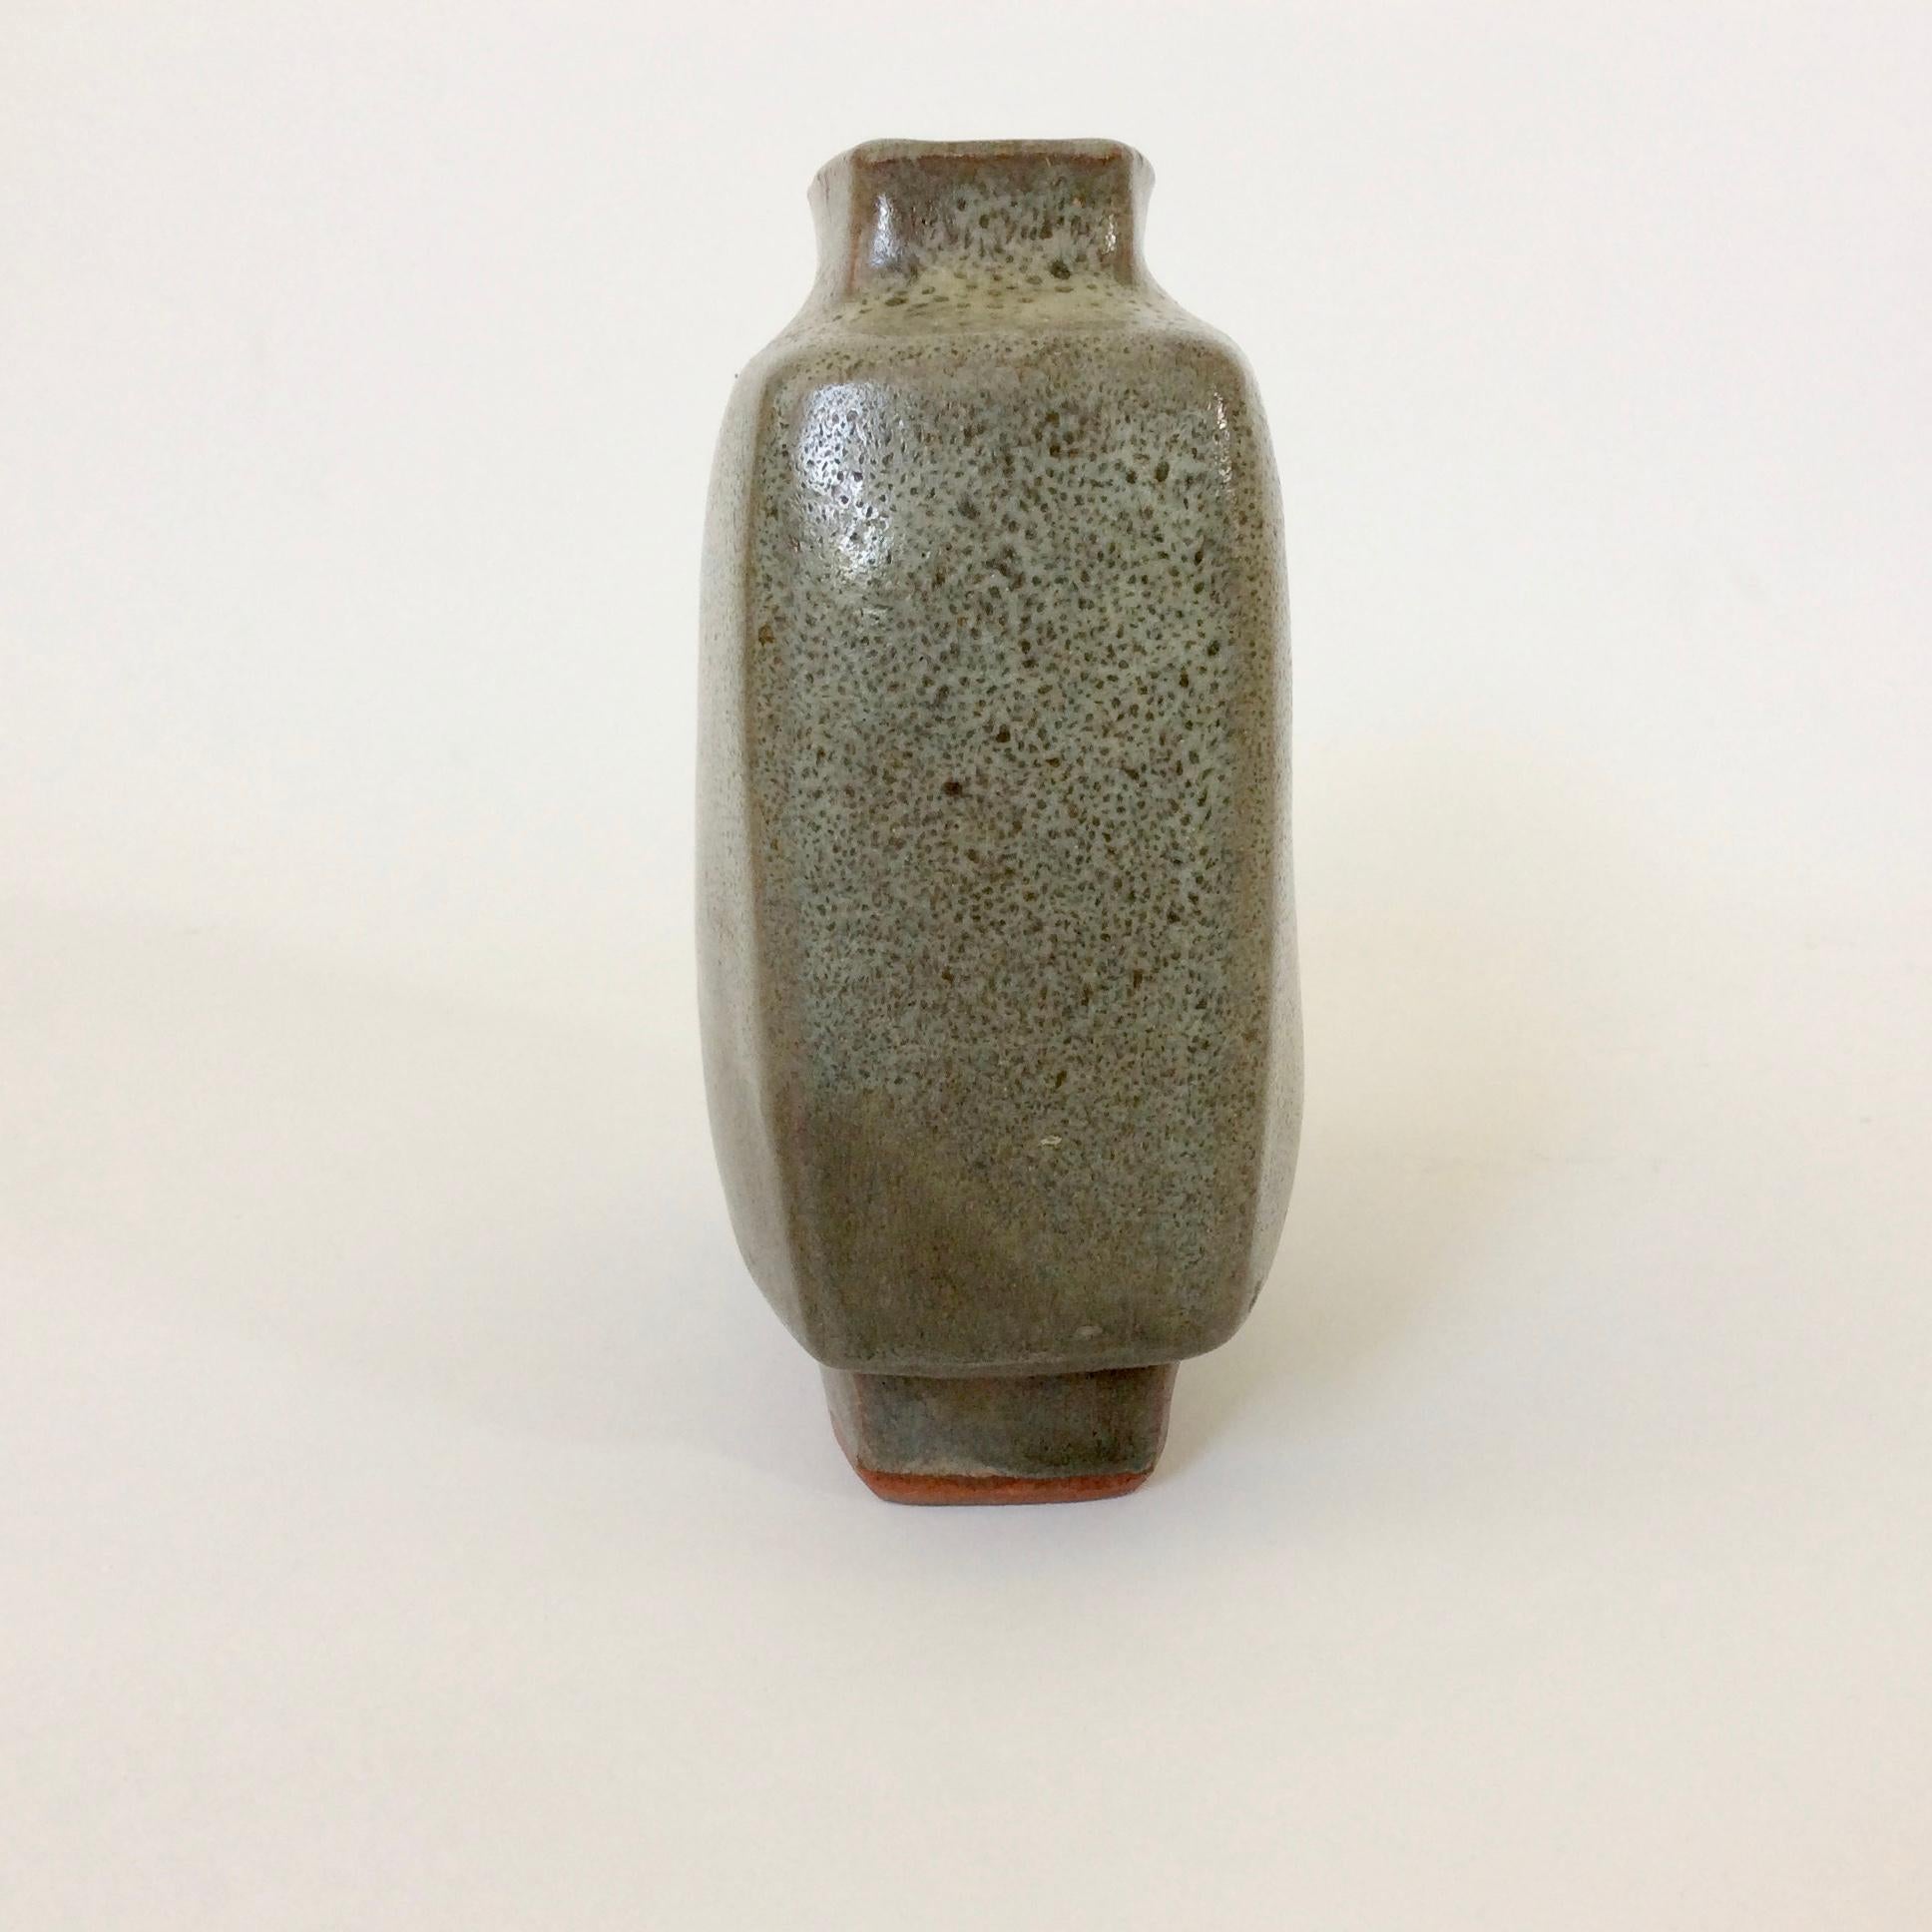 Pierre Culot brown vase, circa 1970, Belgium.
Citroen model, stamped.
Enameled sandstone.
Dimensions: 14 cm H, 14 cm W, 5 cm D.
Good condition.
 